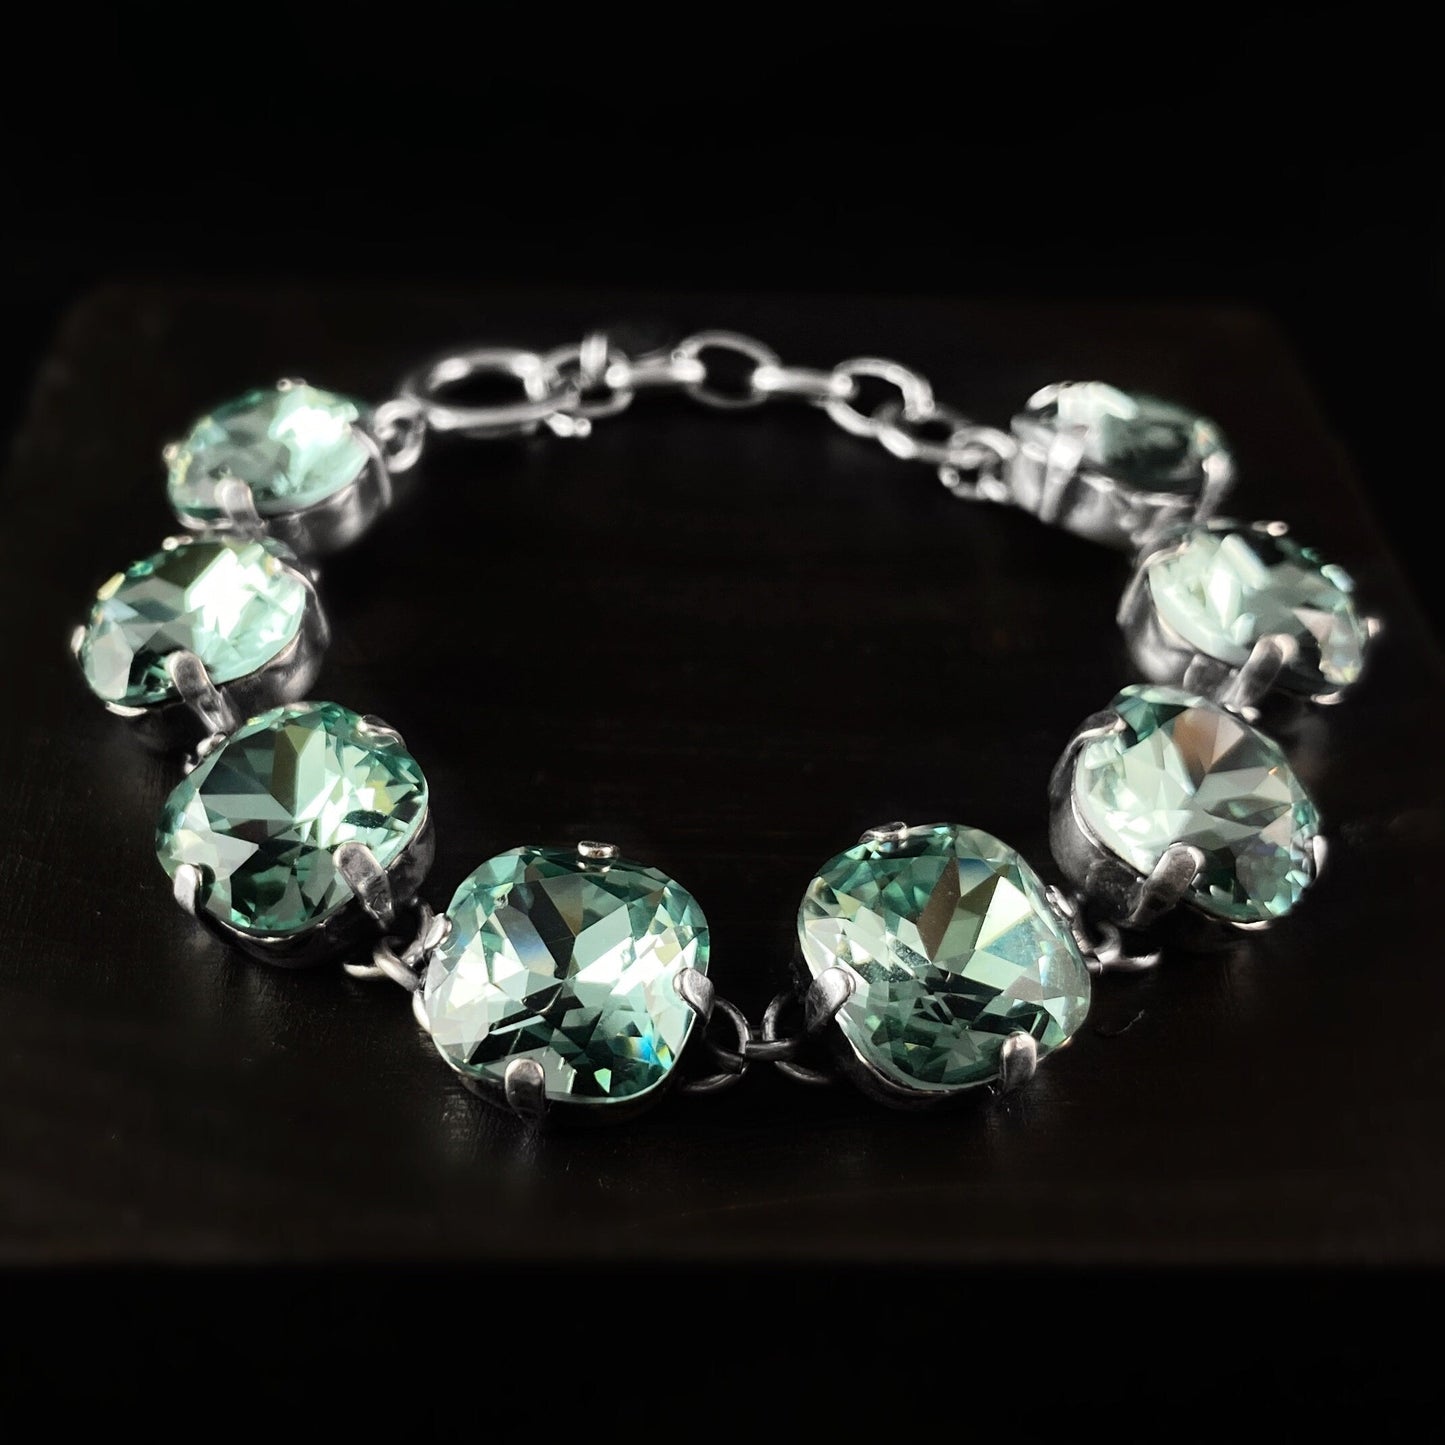 Cushion Cut Swarovski Crystal Bracelet, Mint Green - La Vie Parisienne by Catherine Popesco